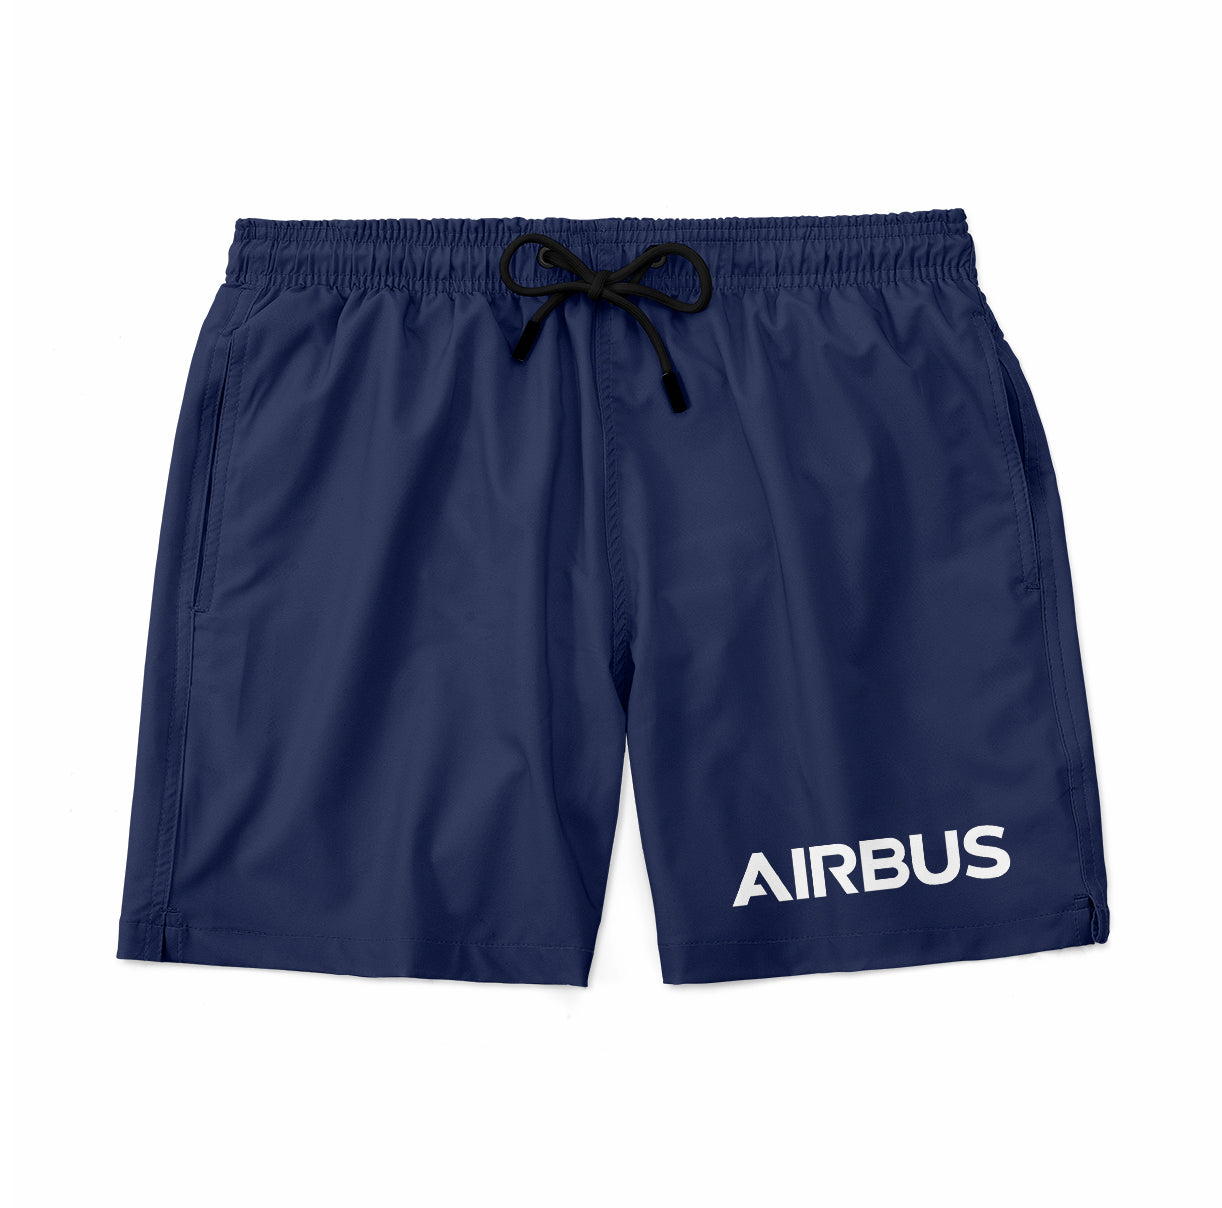 Airbus & Text Designed Swim Trunks & Shorts